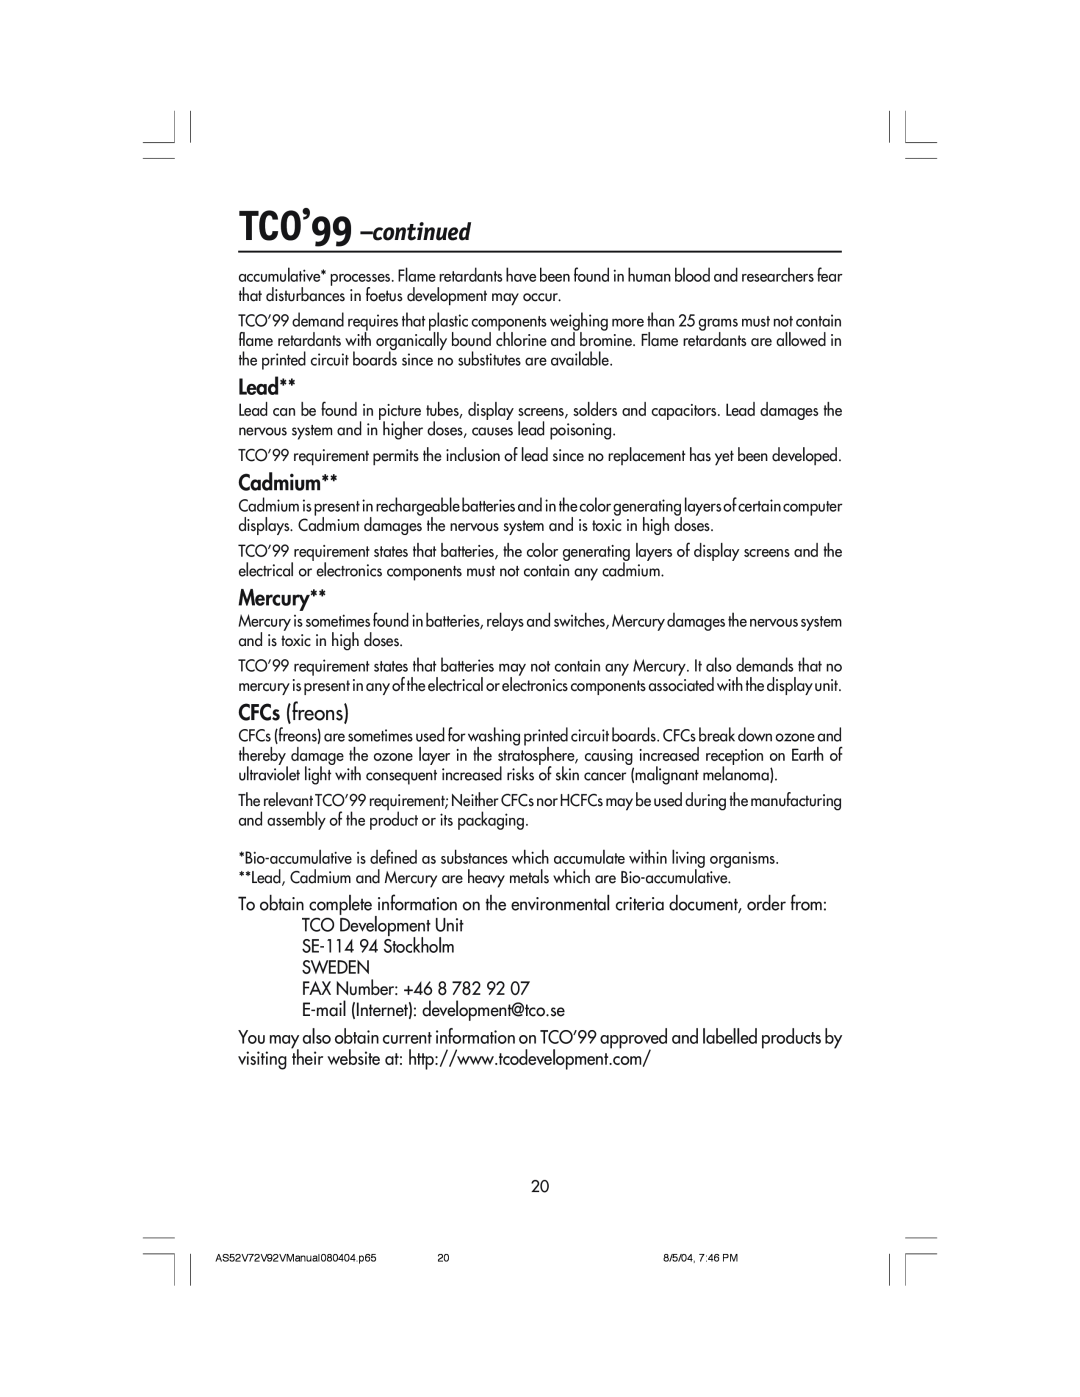 NEC LCD72V, LCD52V manual TCO’99 -continued, Lead, Cadmium, Mercury, CFCs freons 